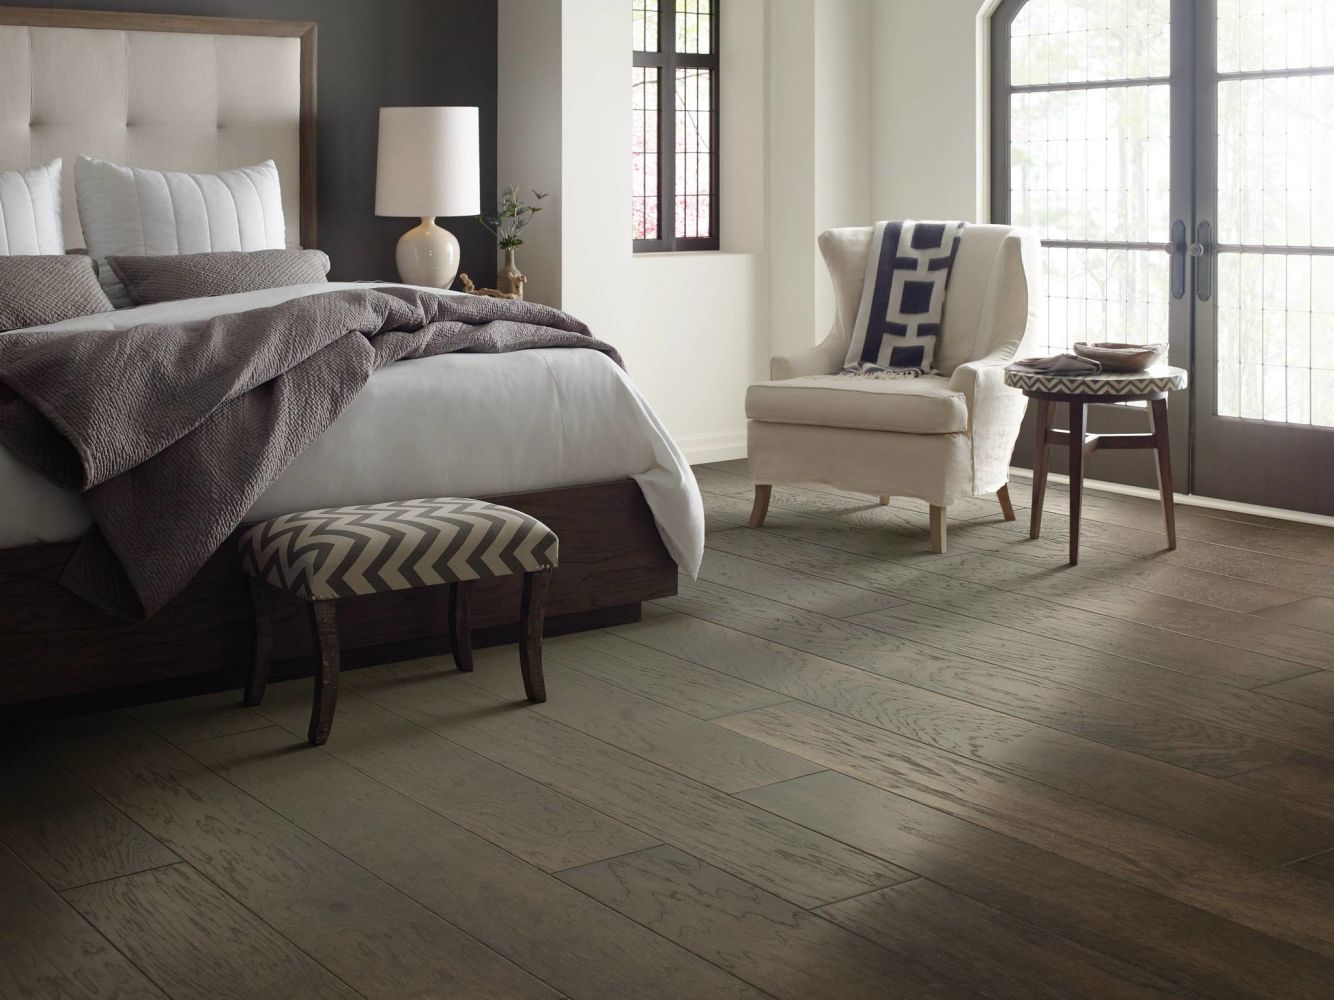 Shaw Floors Carpets Plus Hardwood Destination Polish Timber 6.38 Granite 00510_CH886